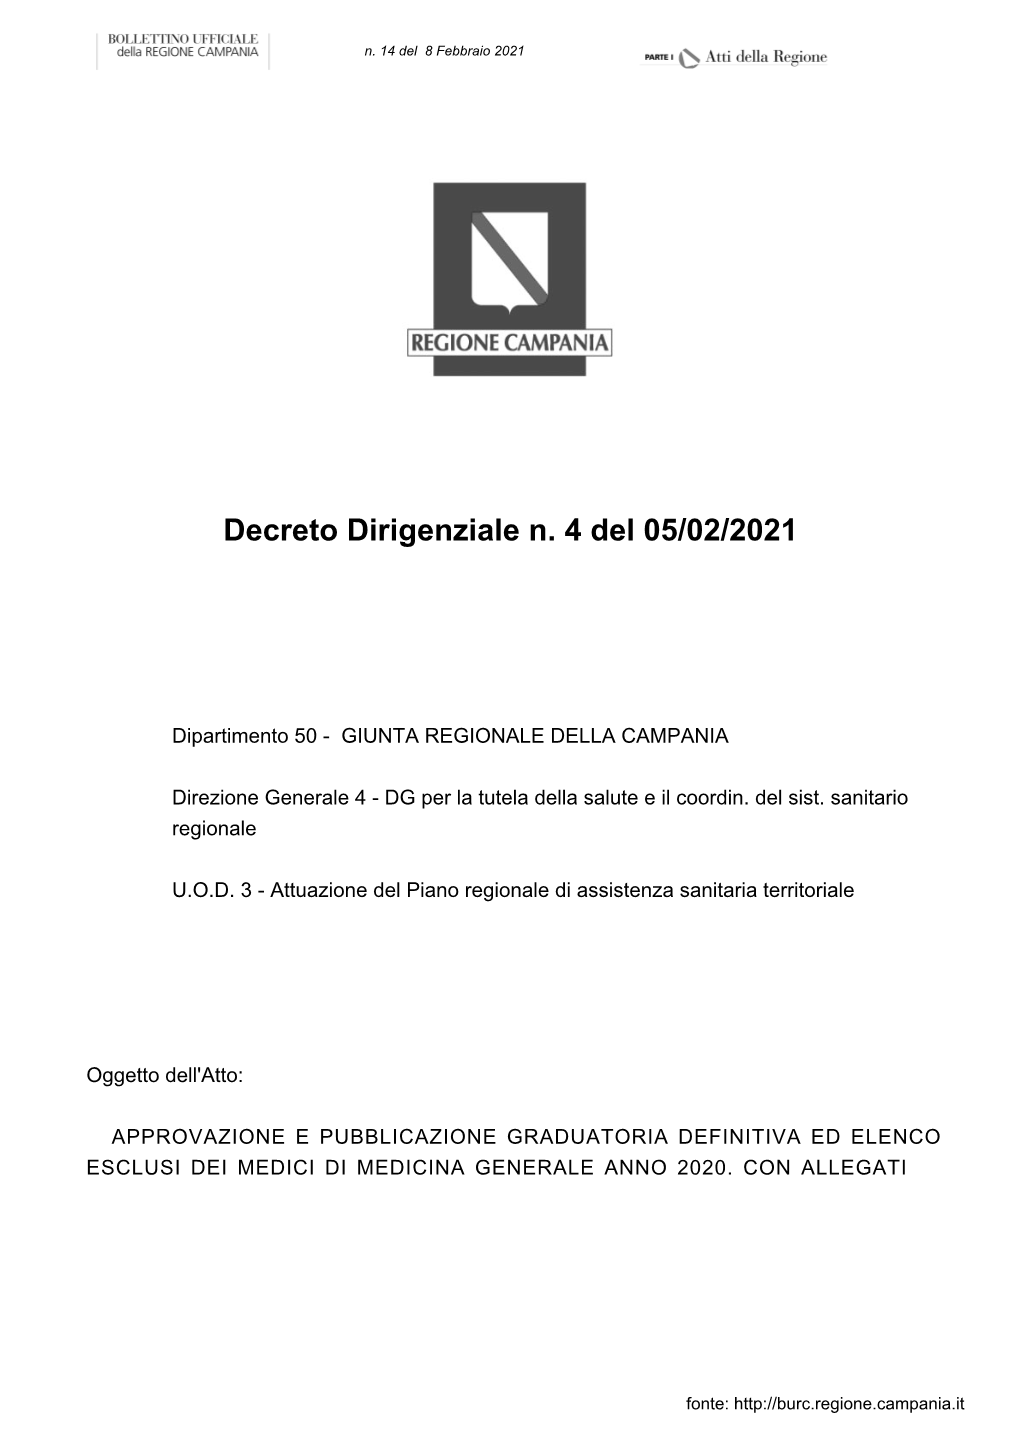 Decreto Dirigenziale N. 4 Del 05/02/2021